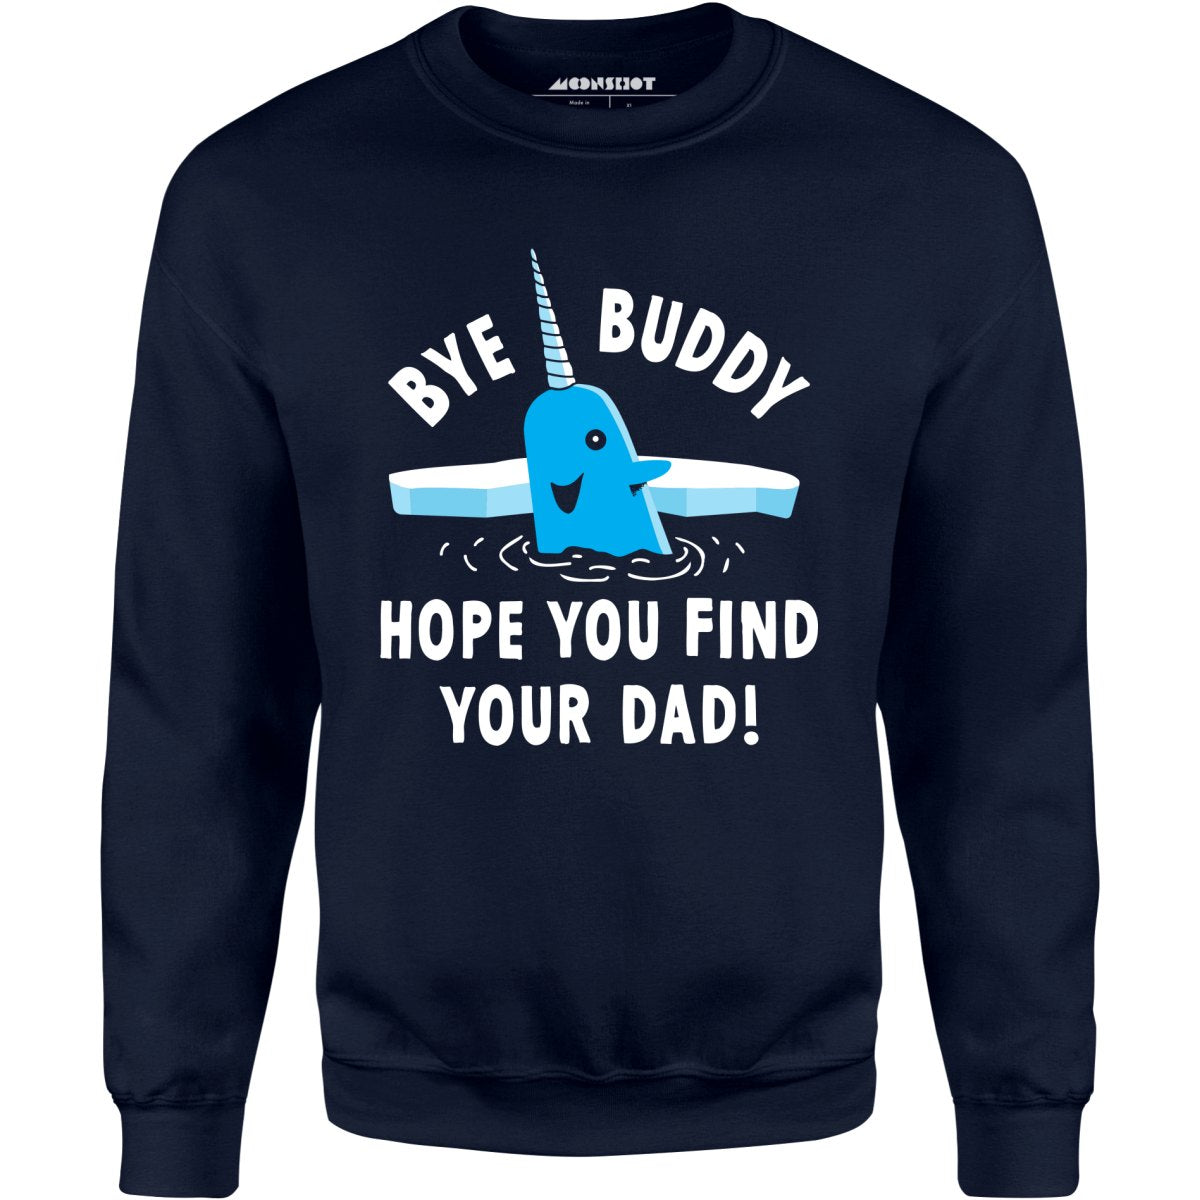 Bye Buddy Hope You Find Your Dad - Unisex Sweatshirt